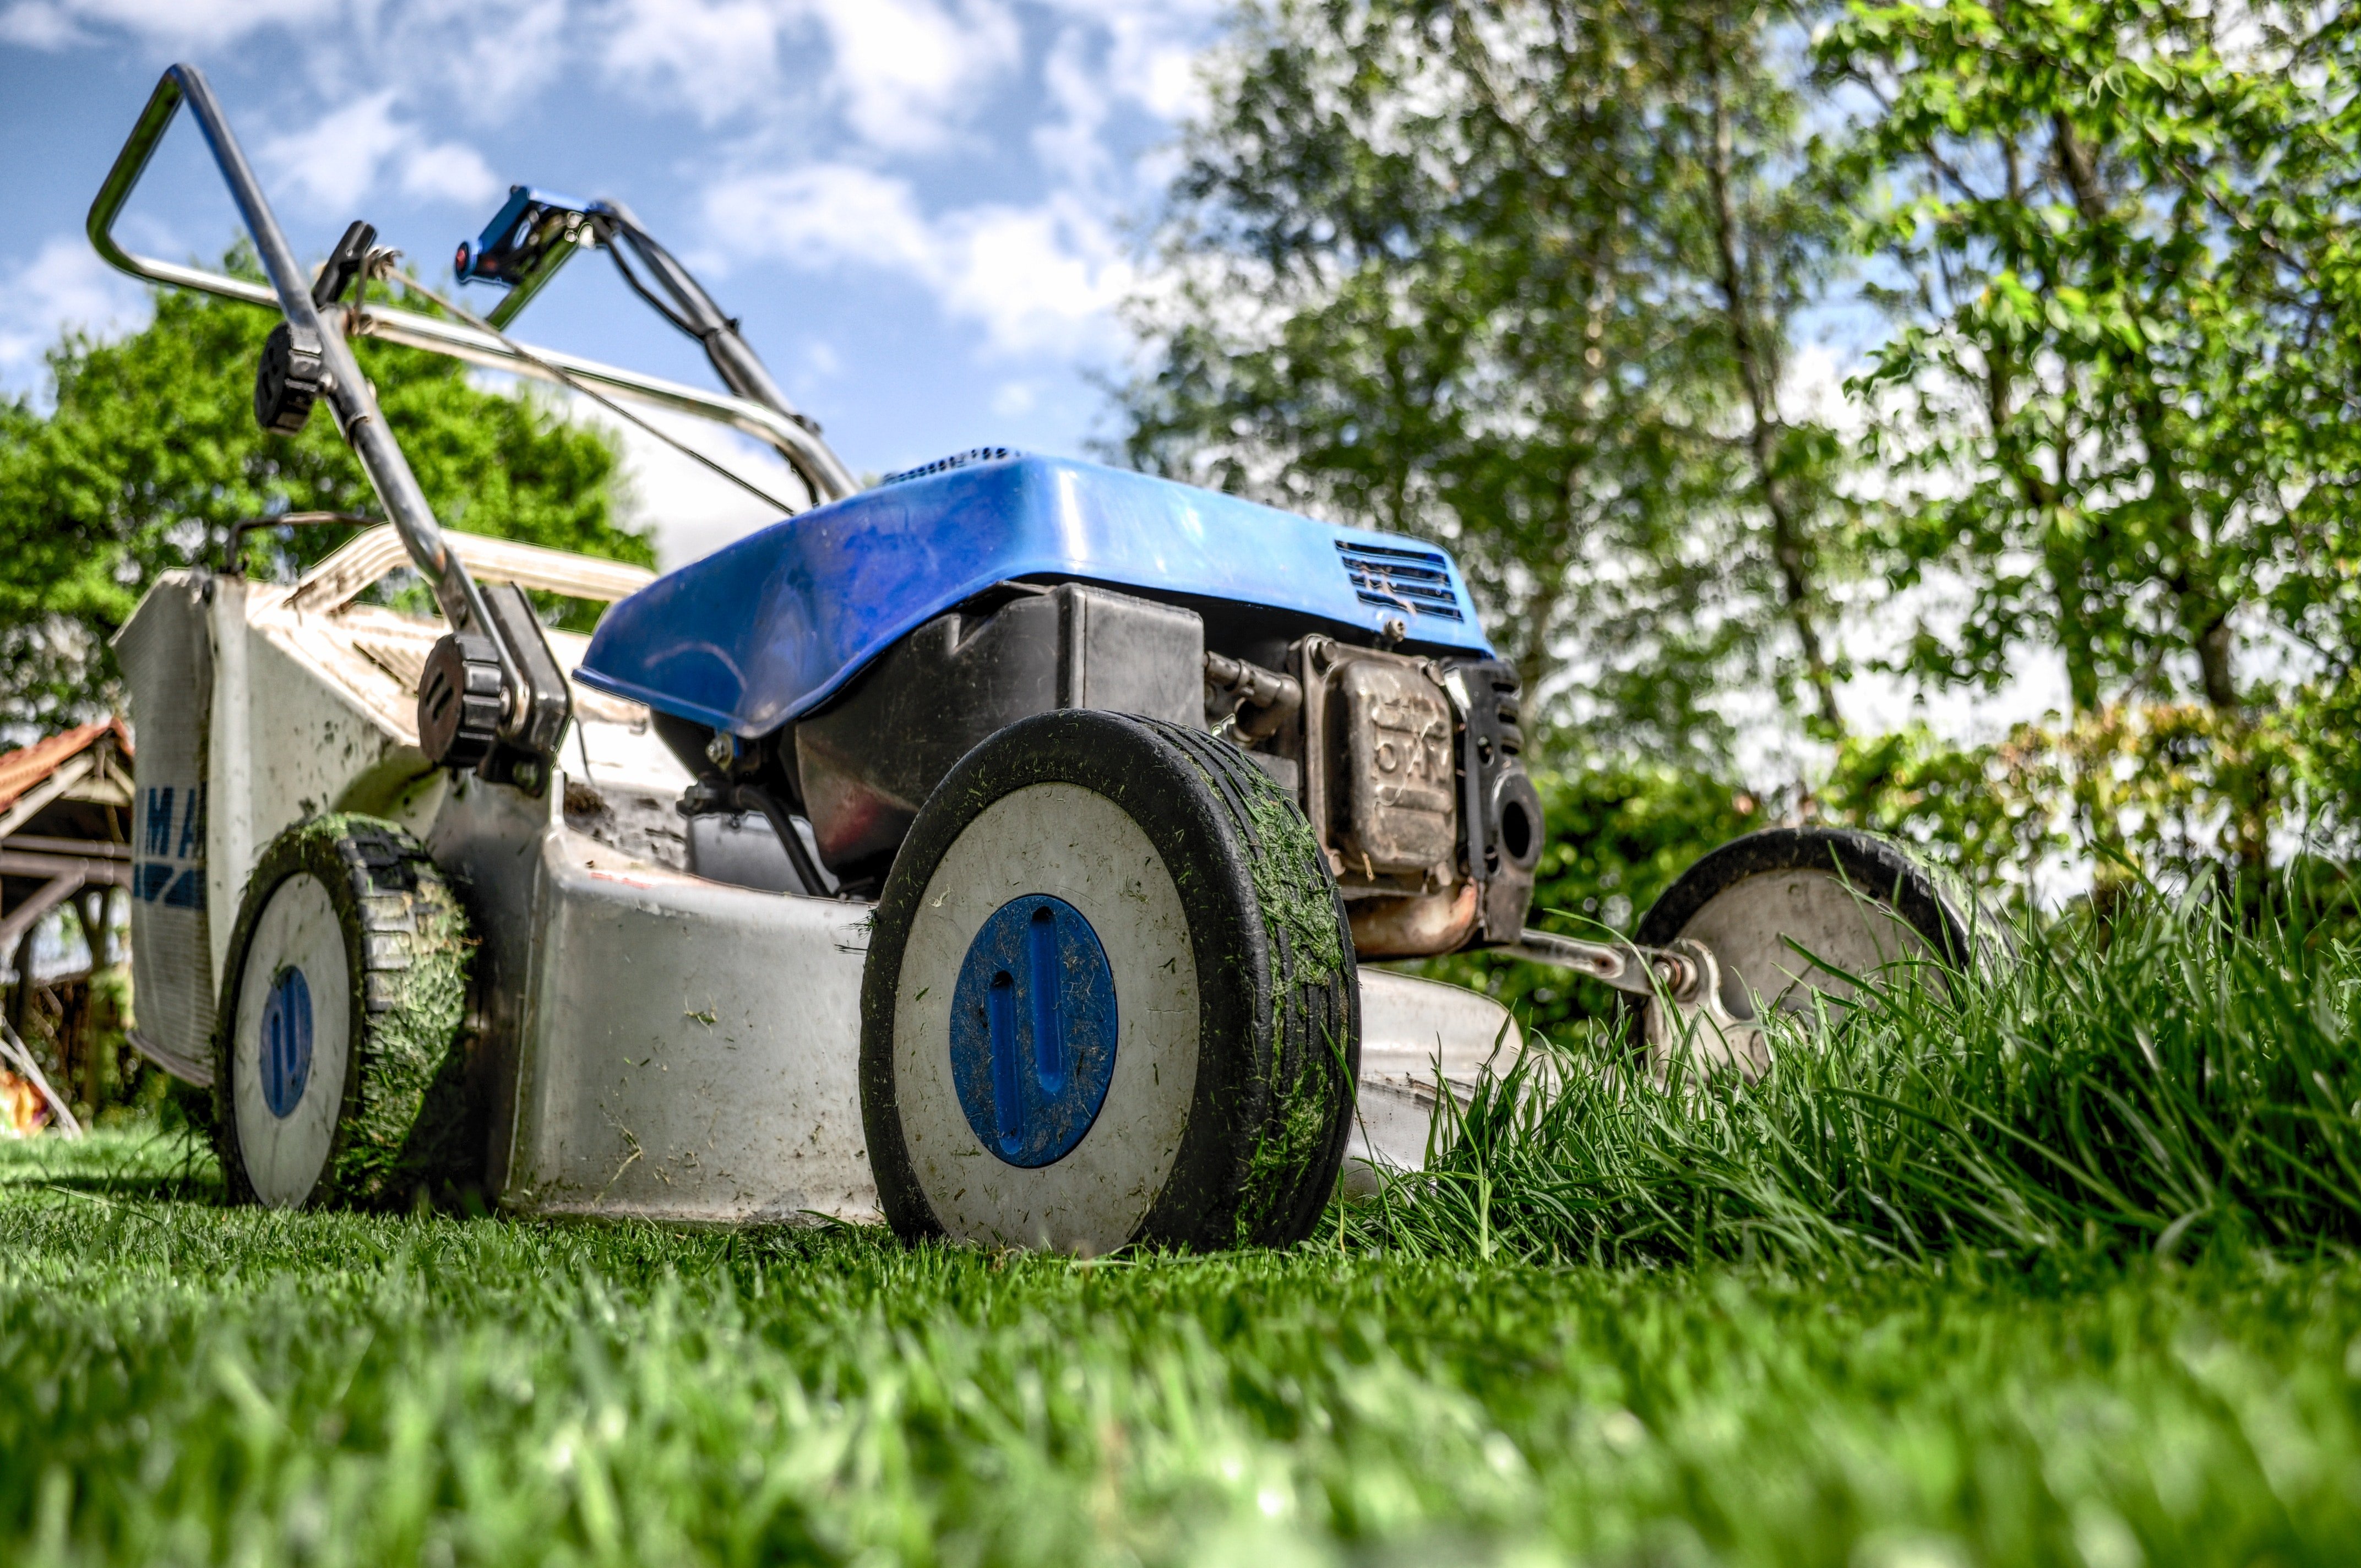 A lawn mower | Photo: Pixabay